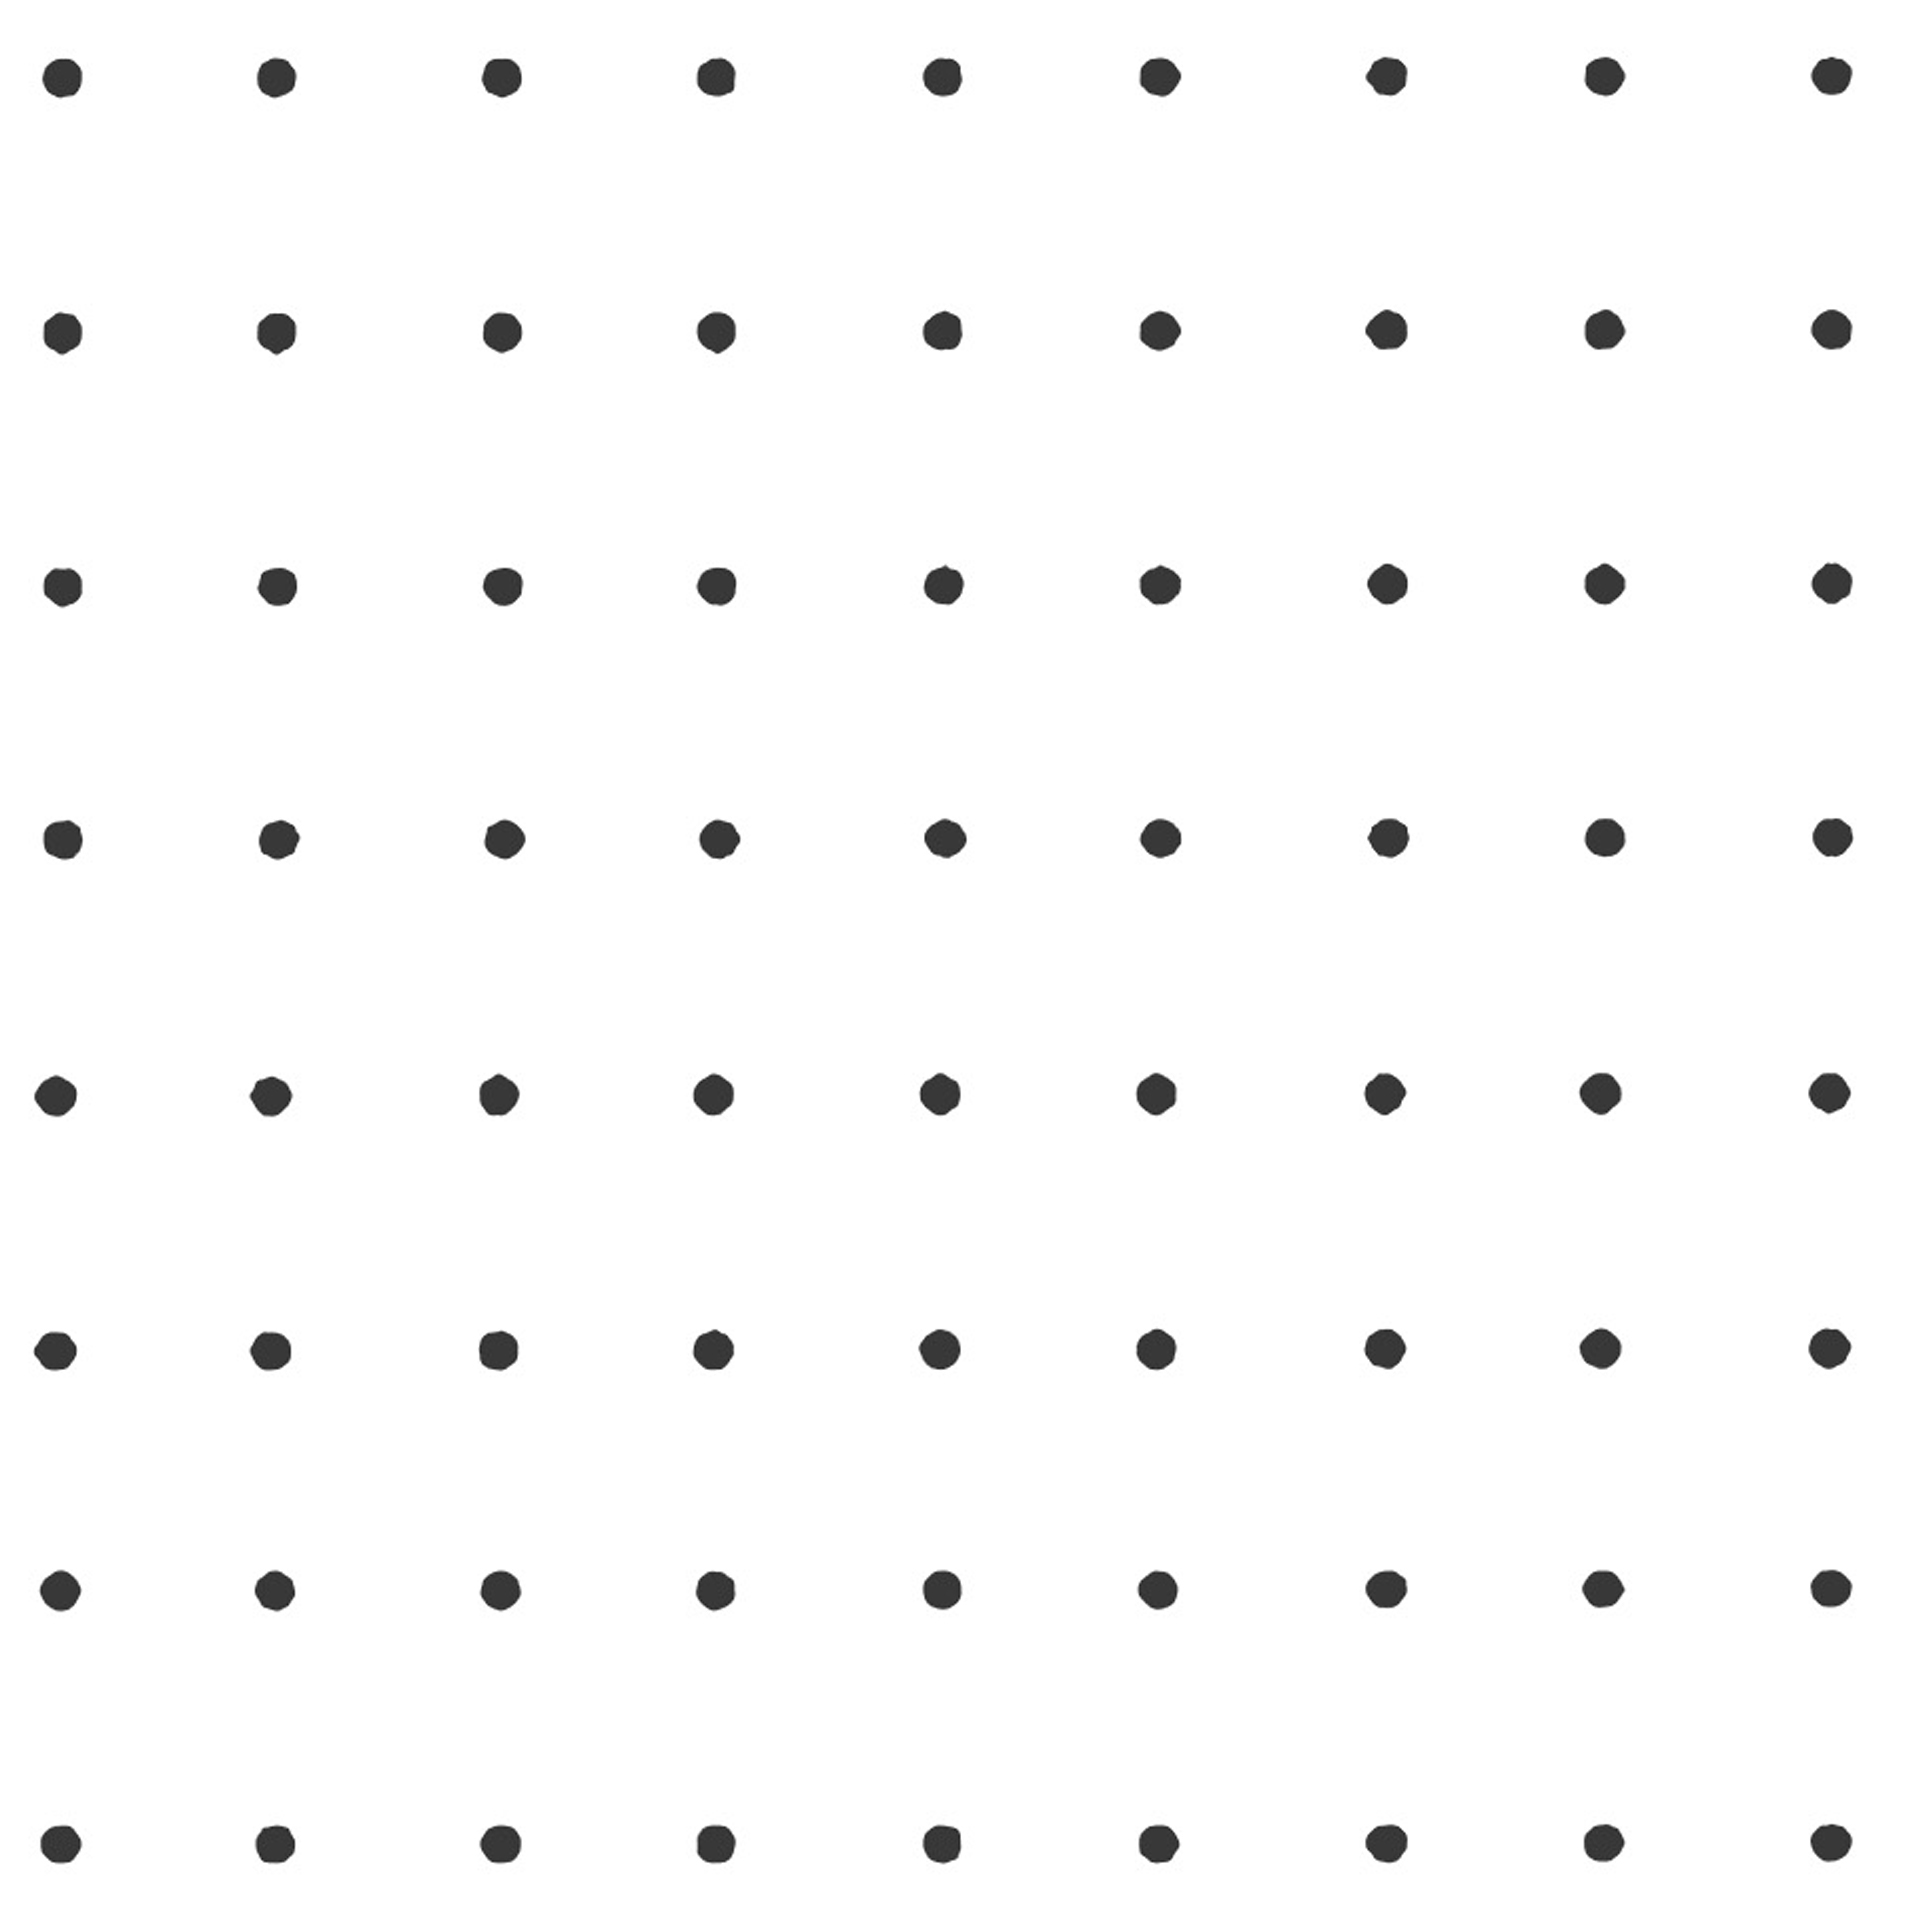 Dots Square Grid Image